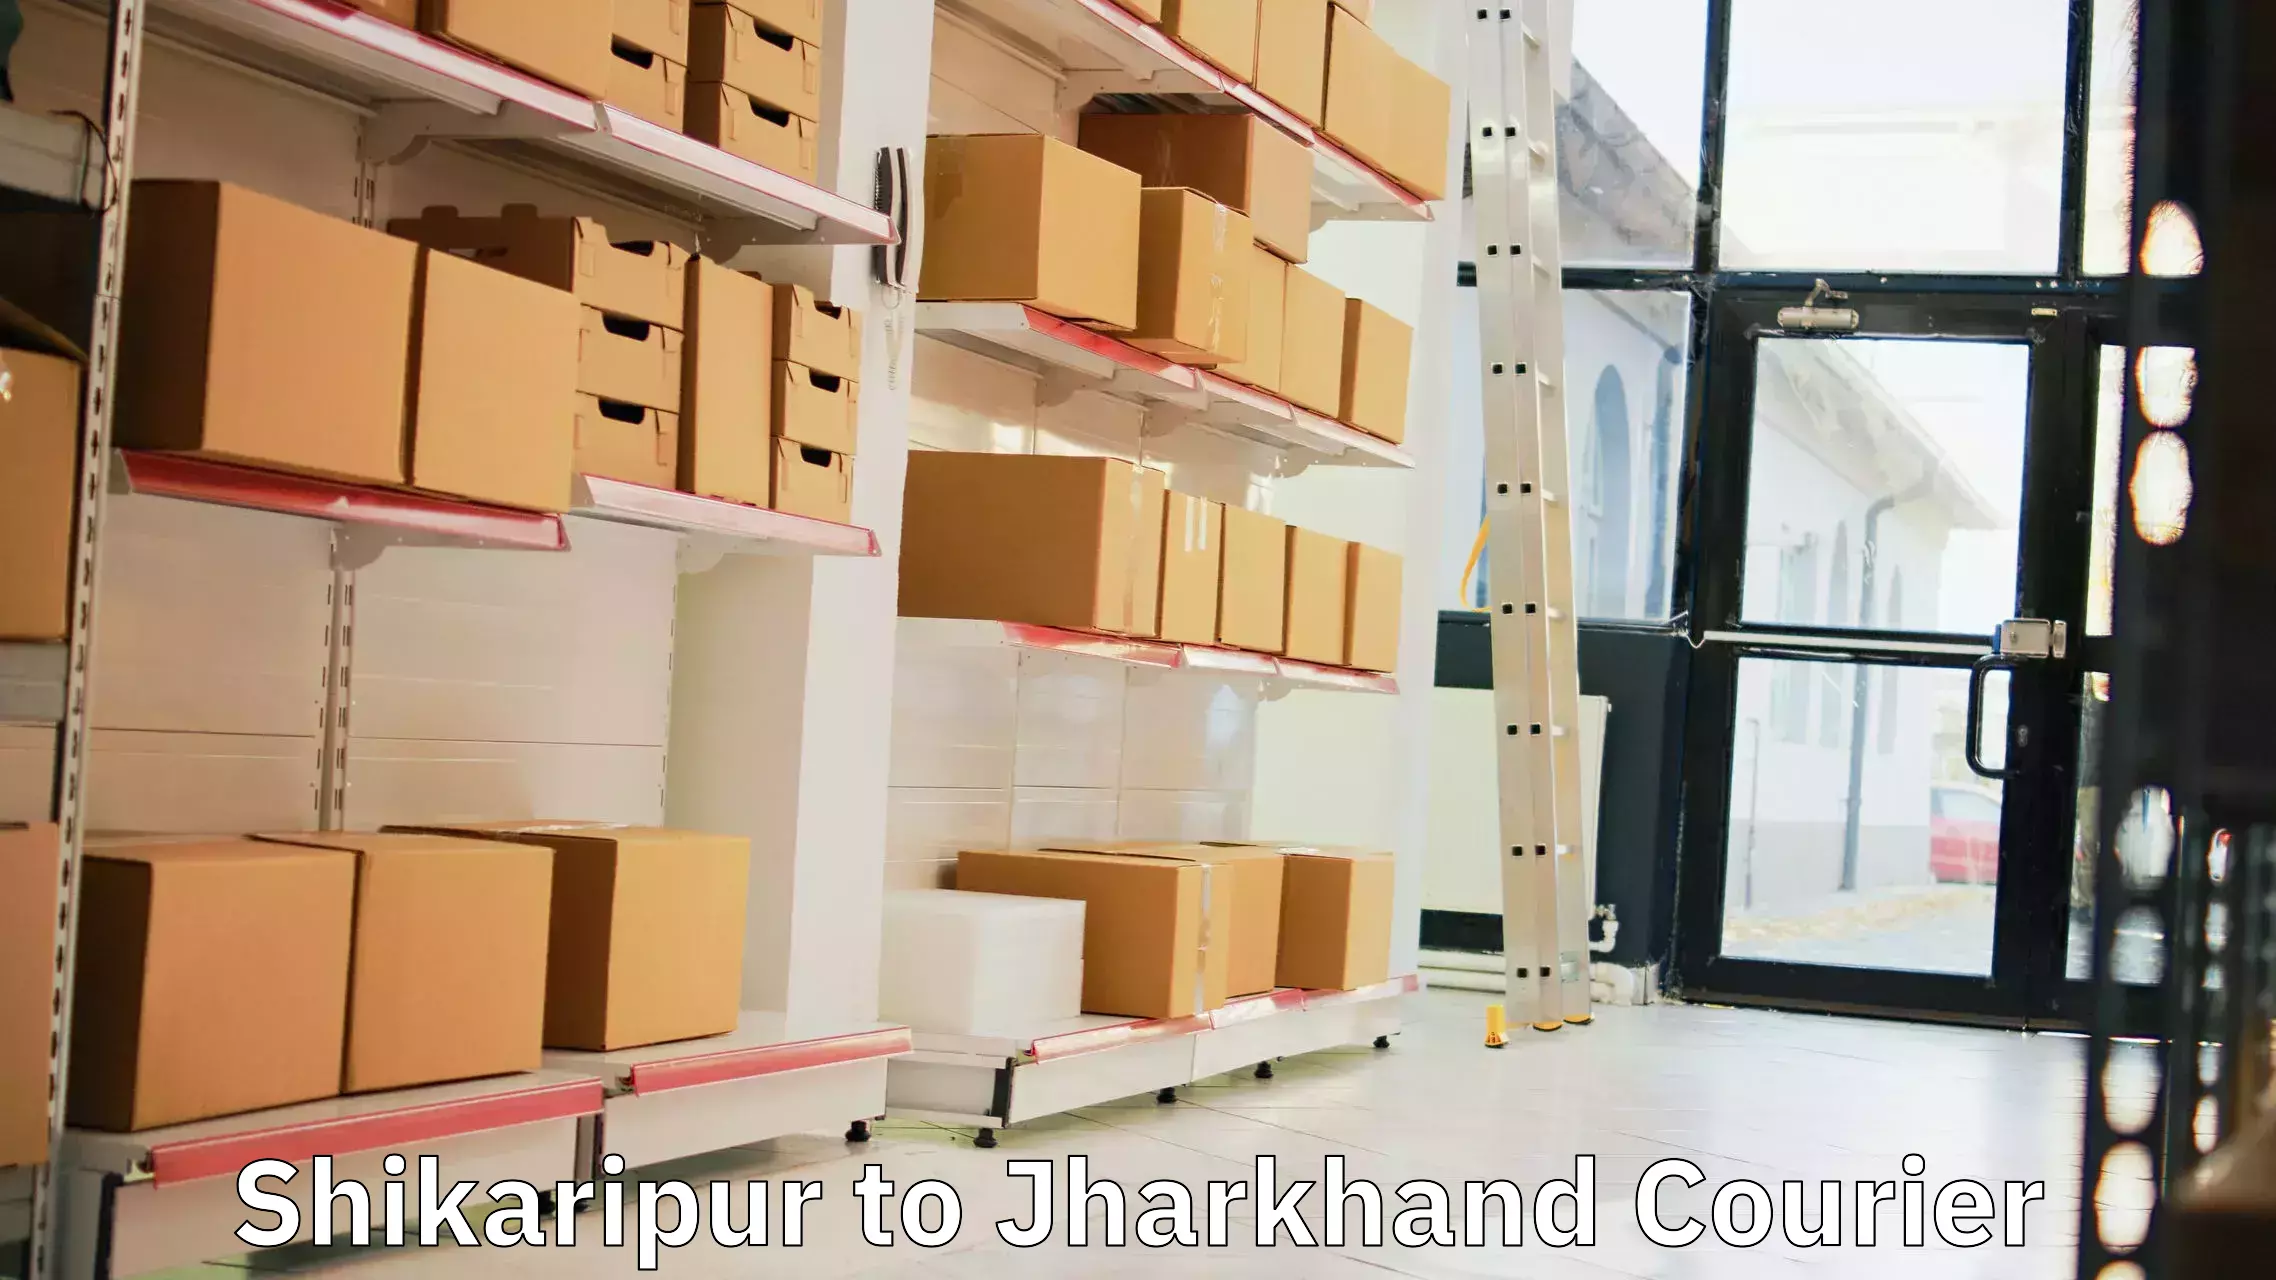 Courier service partnerships Shikaripur to Doranda